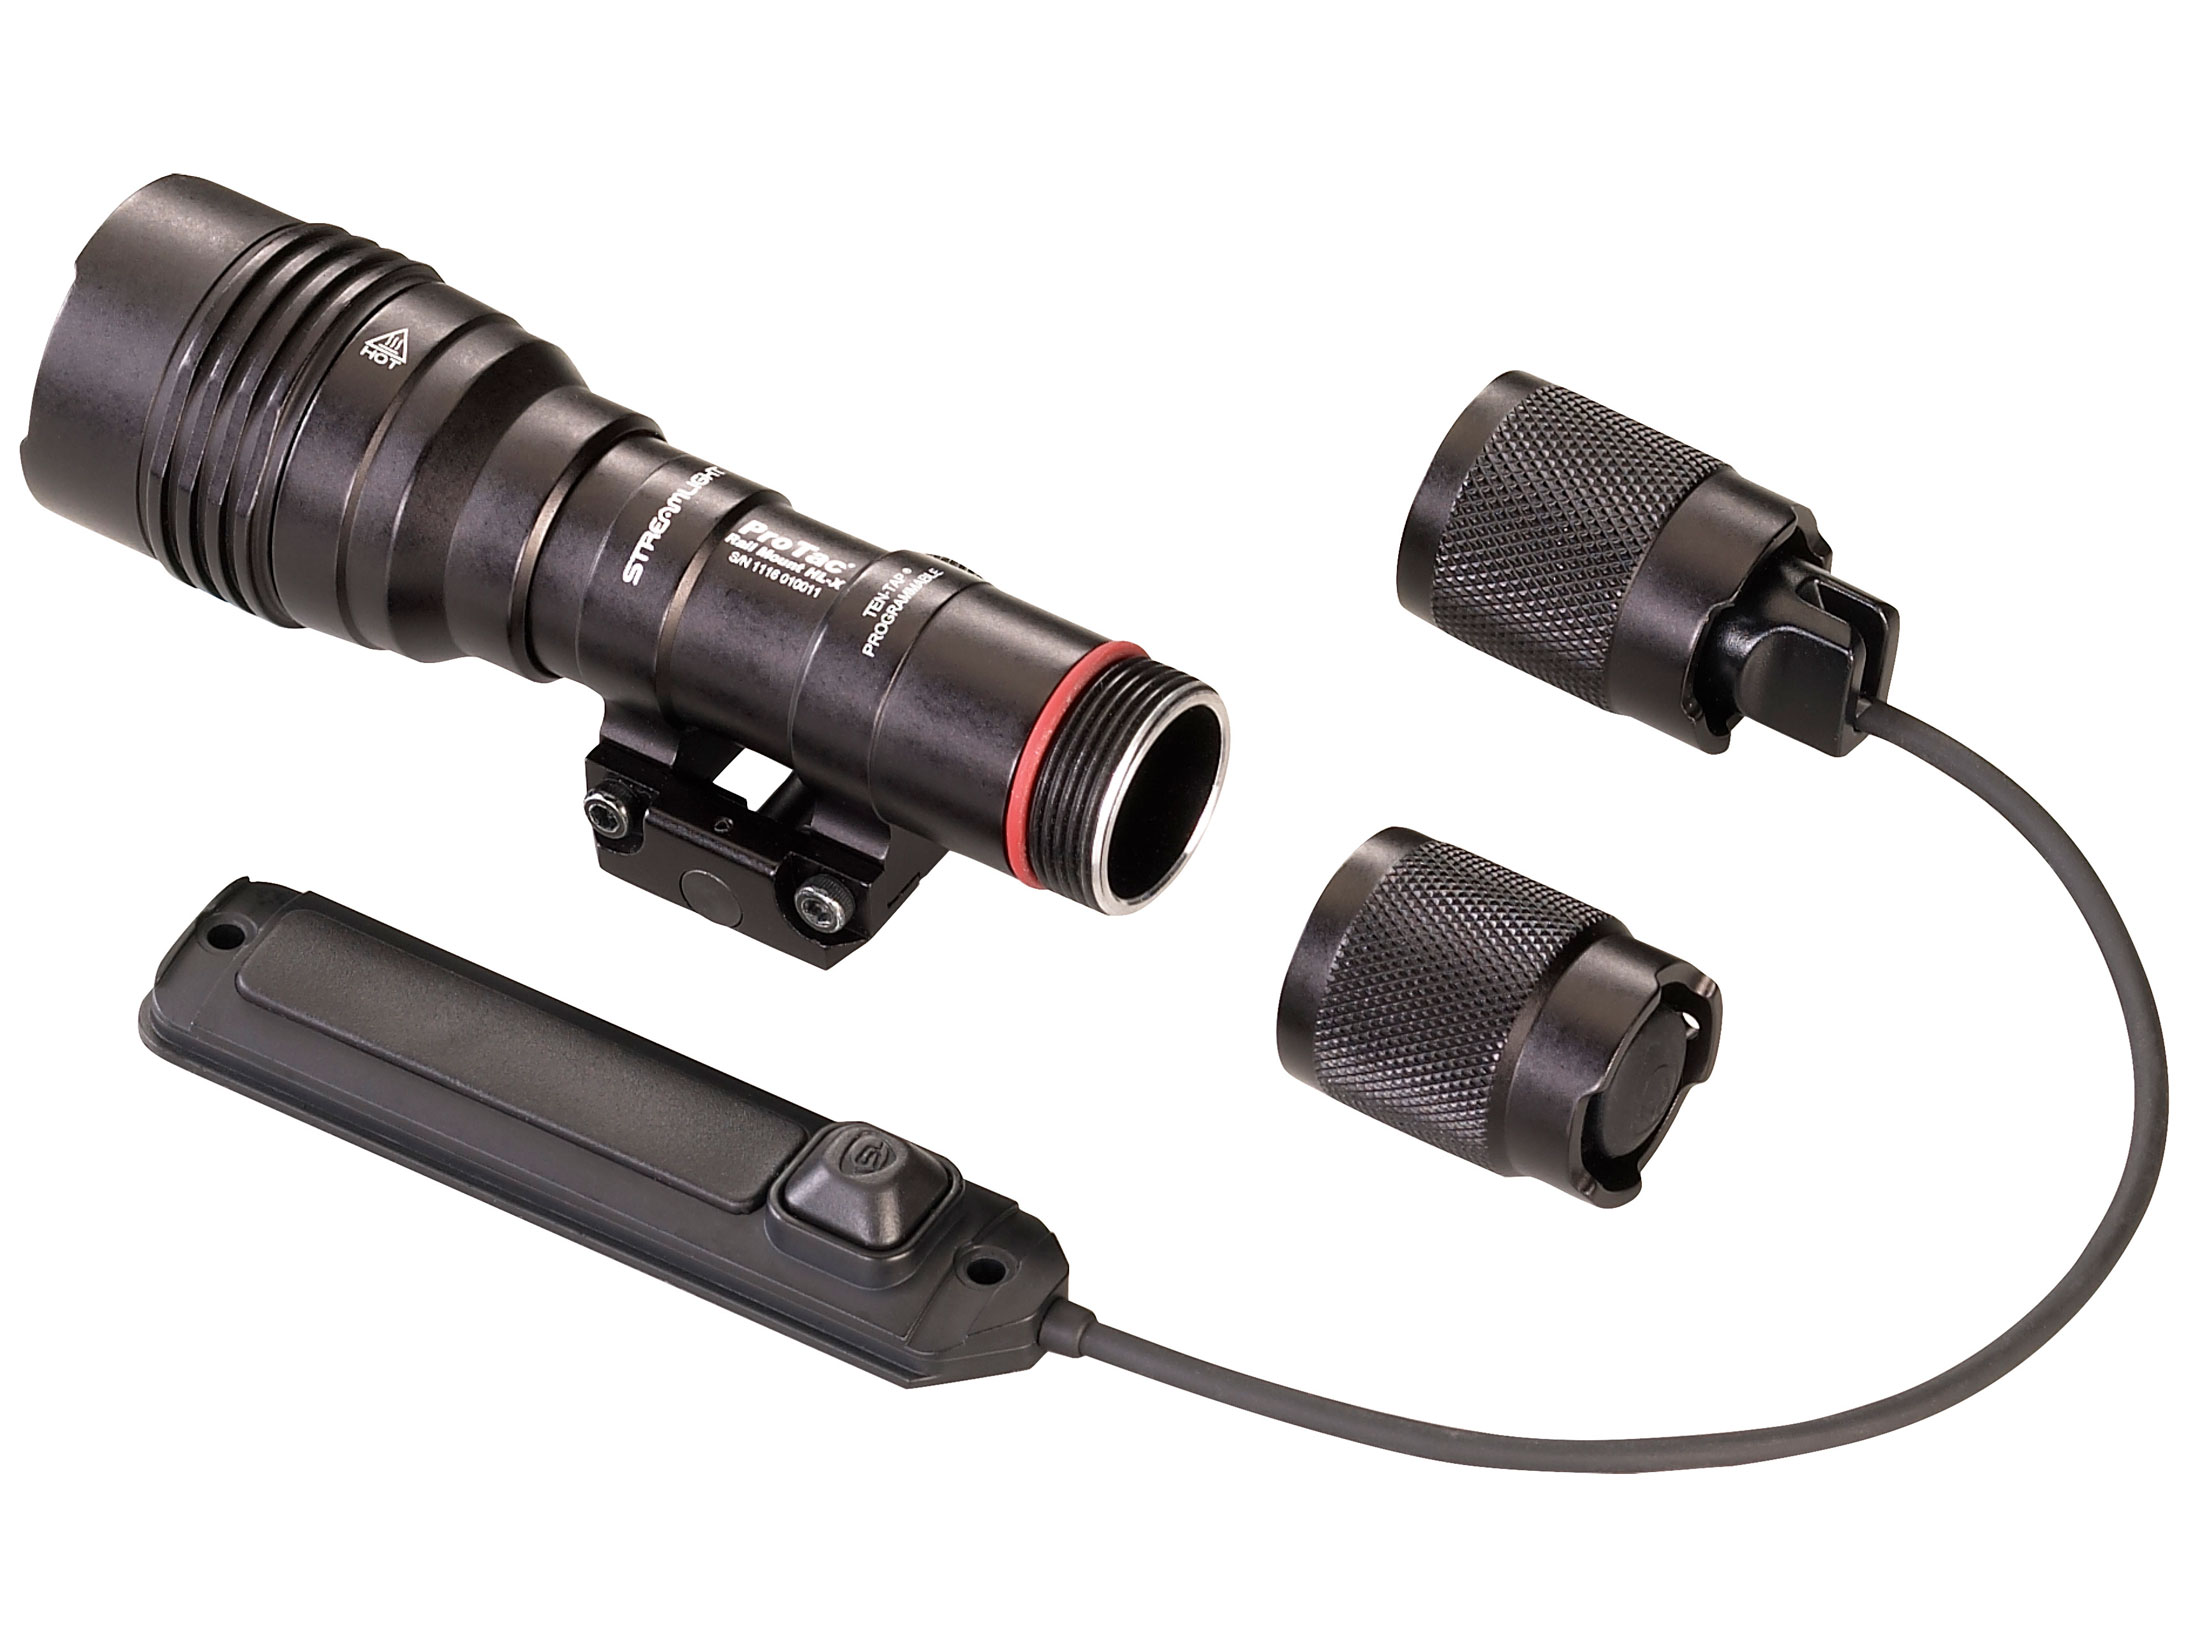 Streamlight 88066 ProTac Rail Mount Hl-x 1000 Lumen Weapon Flashlight for sale online 